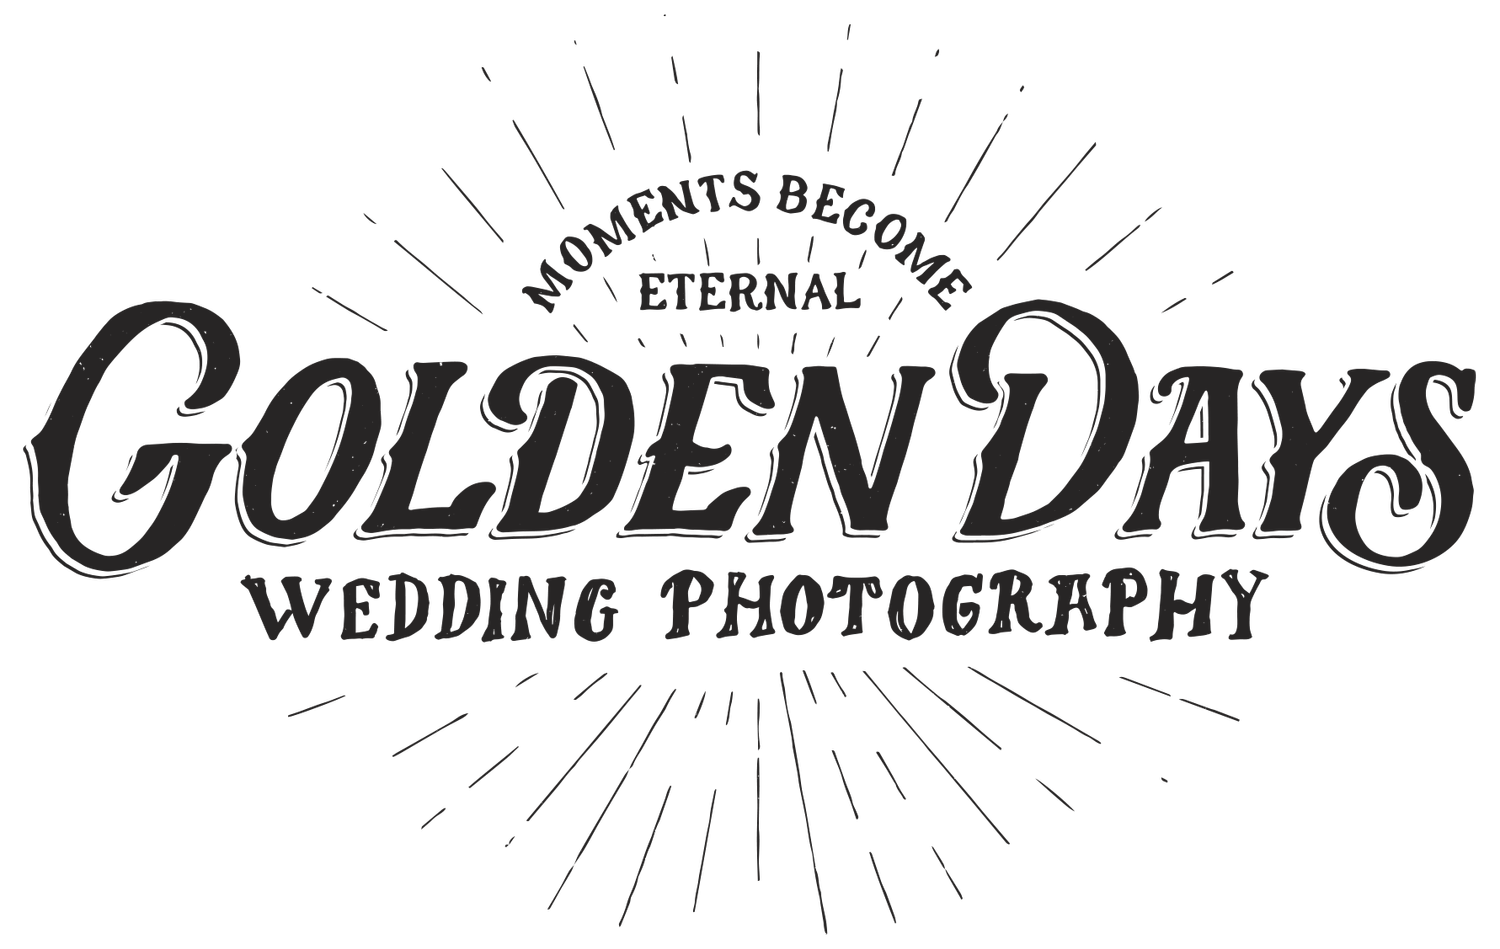 Golden Days Wedding Photography